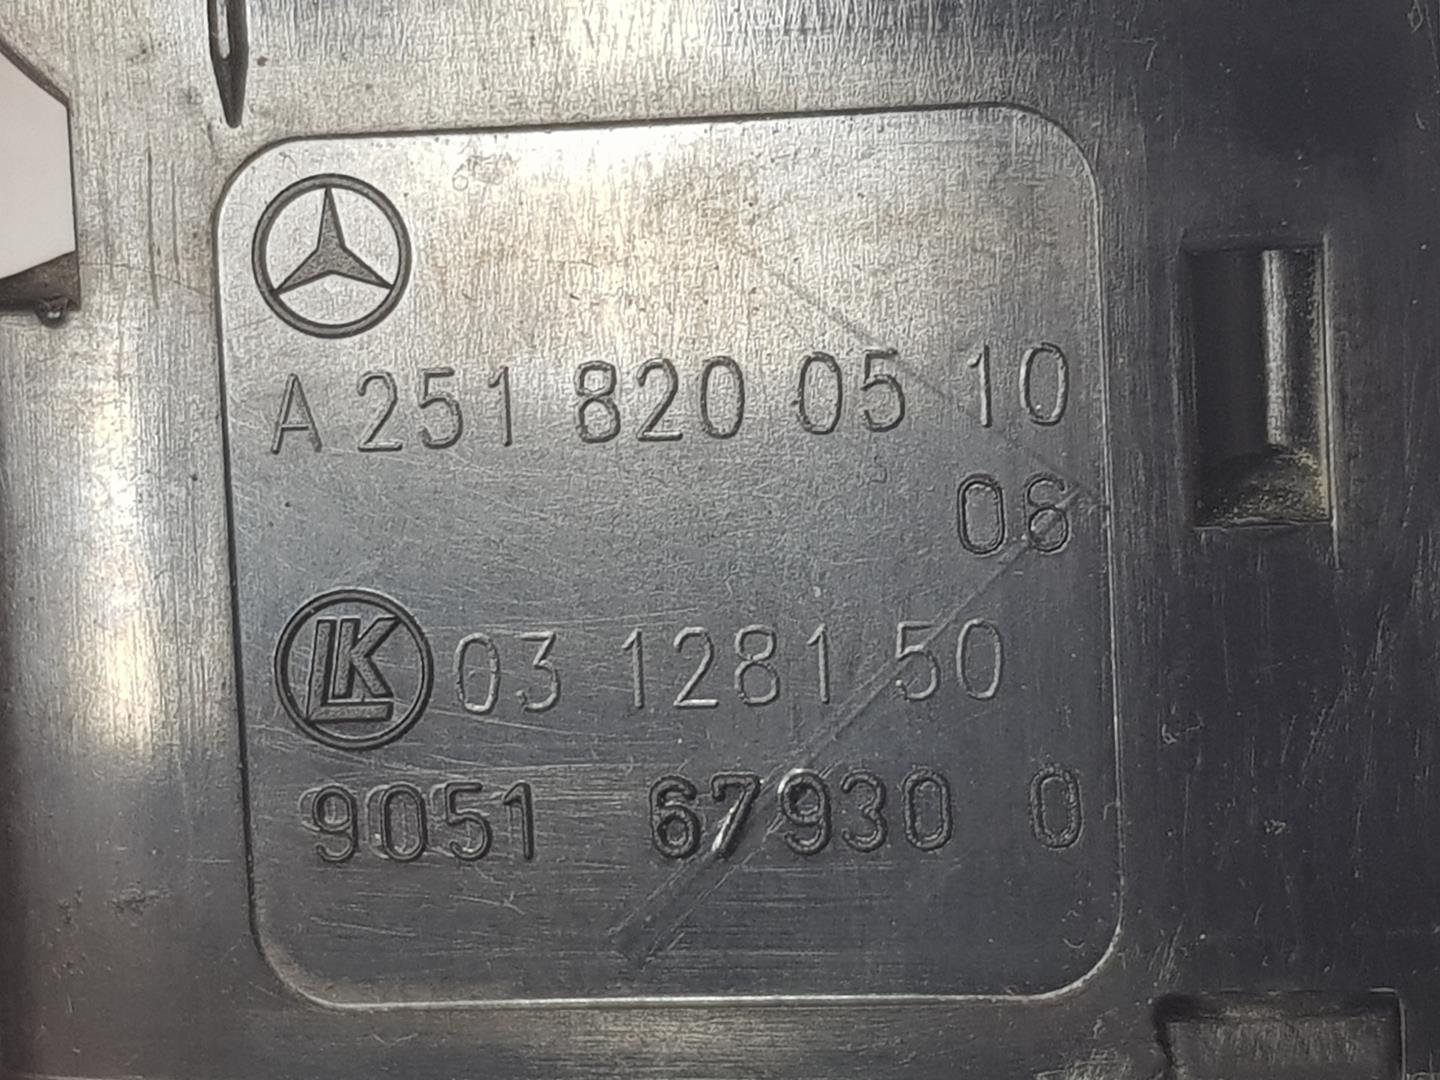 MERCEDES-BENZ M-Class W164 (2005-2011) Кнопка стеклоподъемника задней правой двери A2518200510, A2518200510 24230224